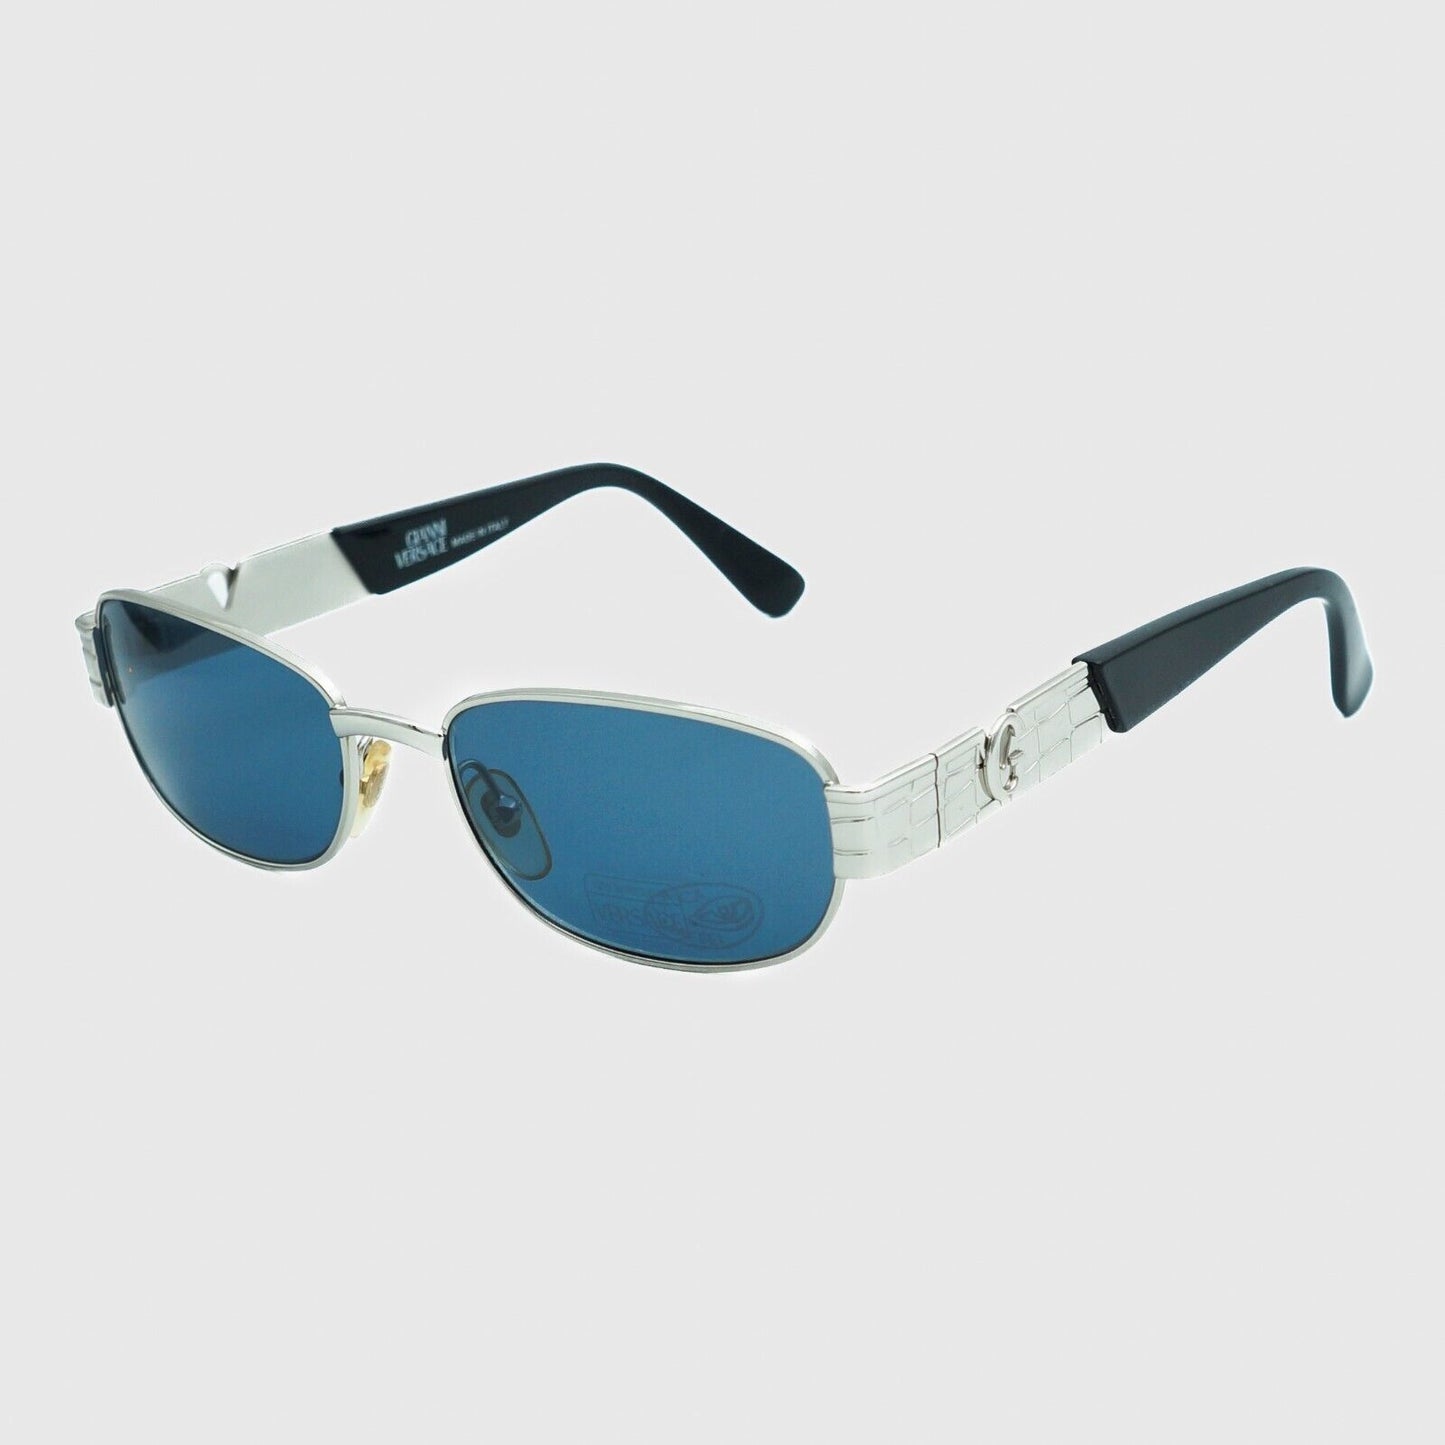 GIANNI VERSACE S21 Black Silver Rectangle Sunglasses Vintage 90s 00s